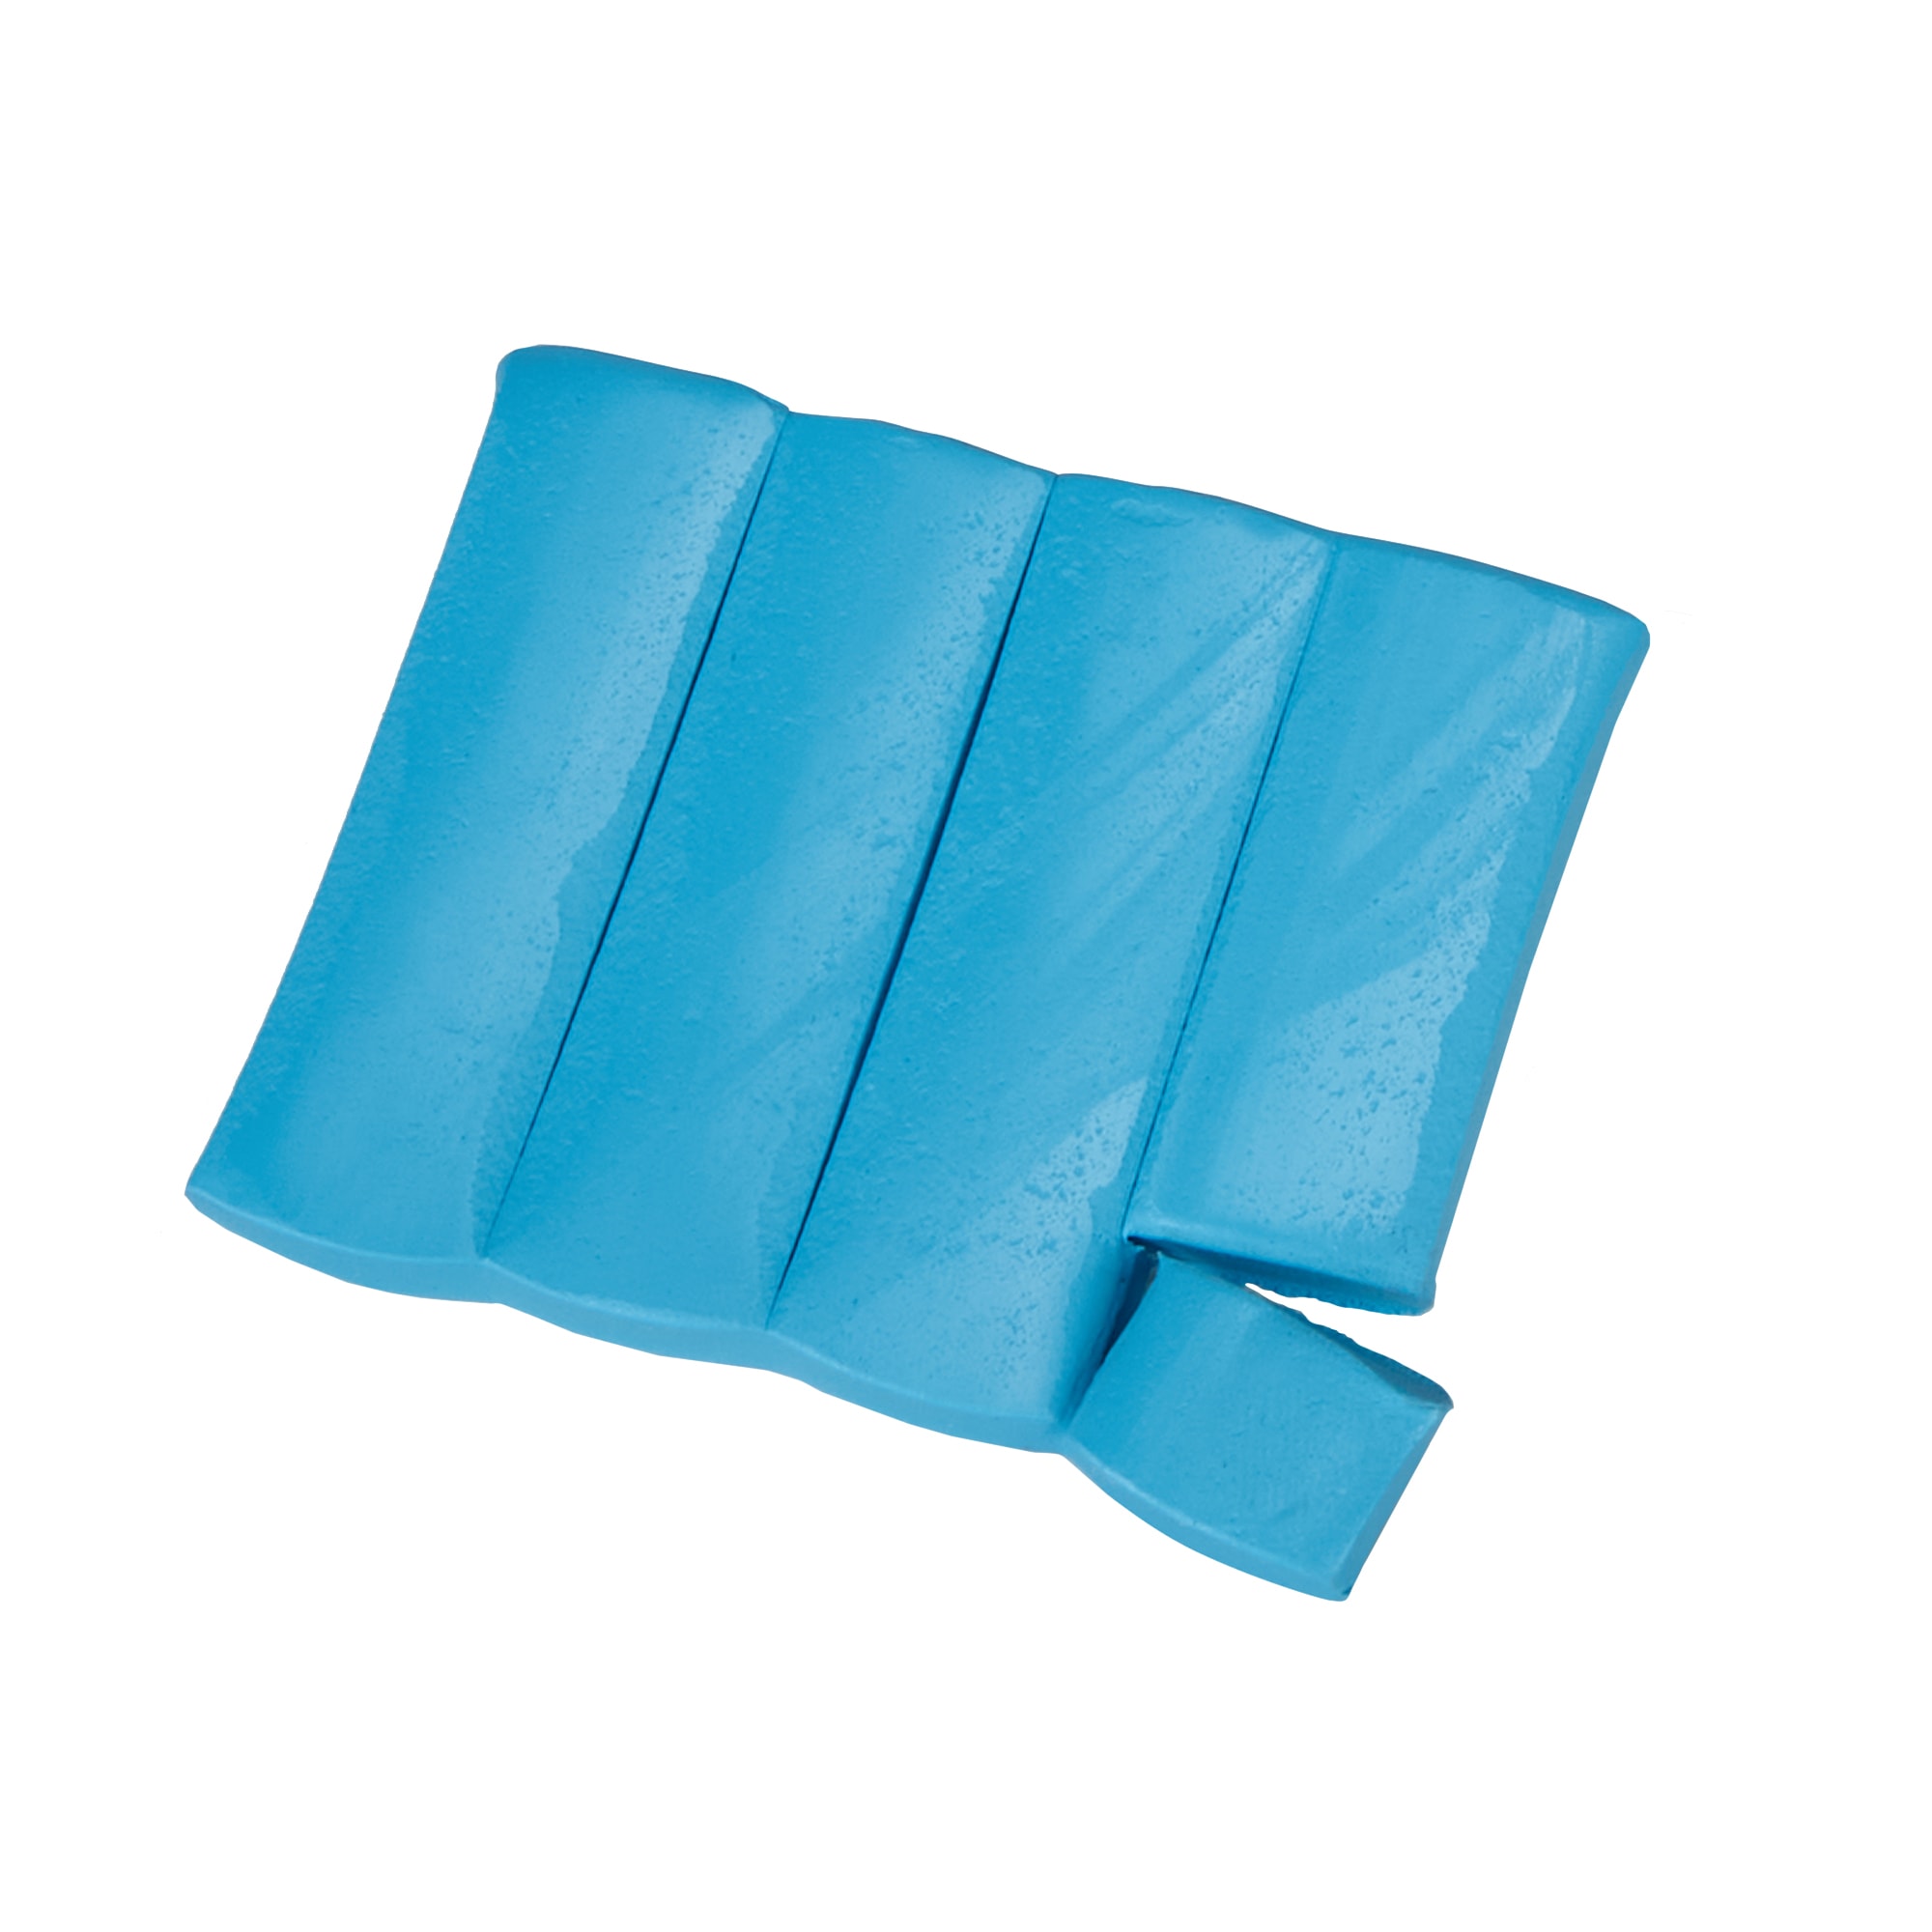 12 Pack Stick'rz Adhesive Backed Felt 9X12-Royal Blue S0IKU-678